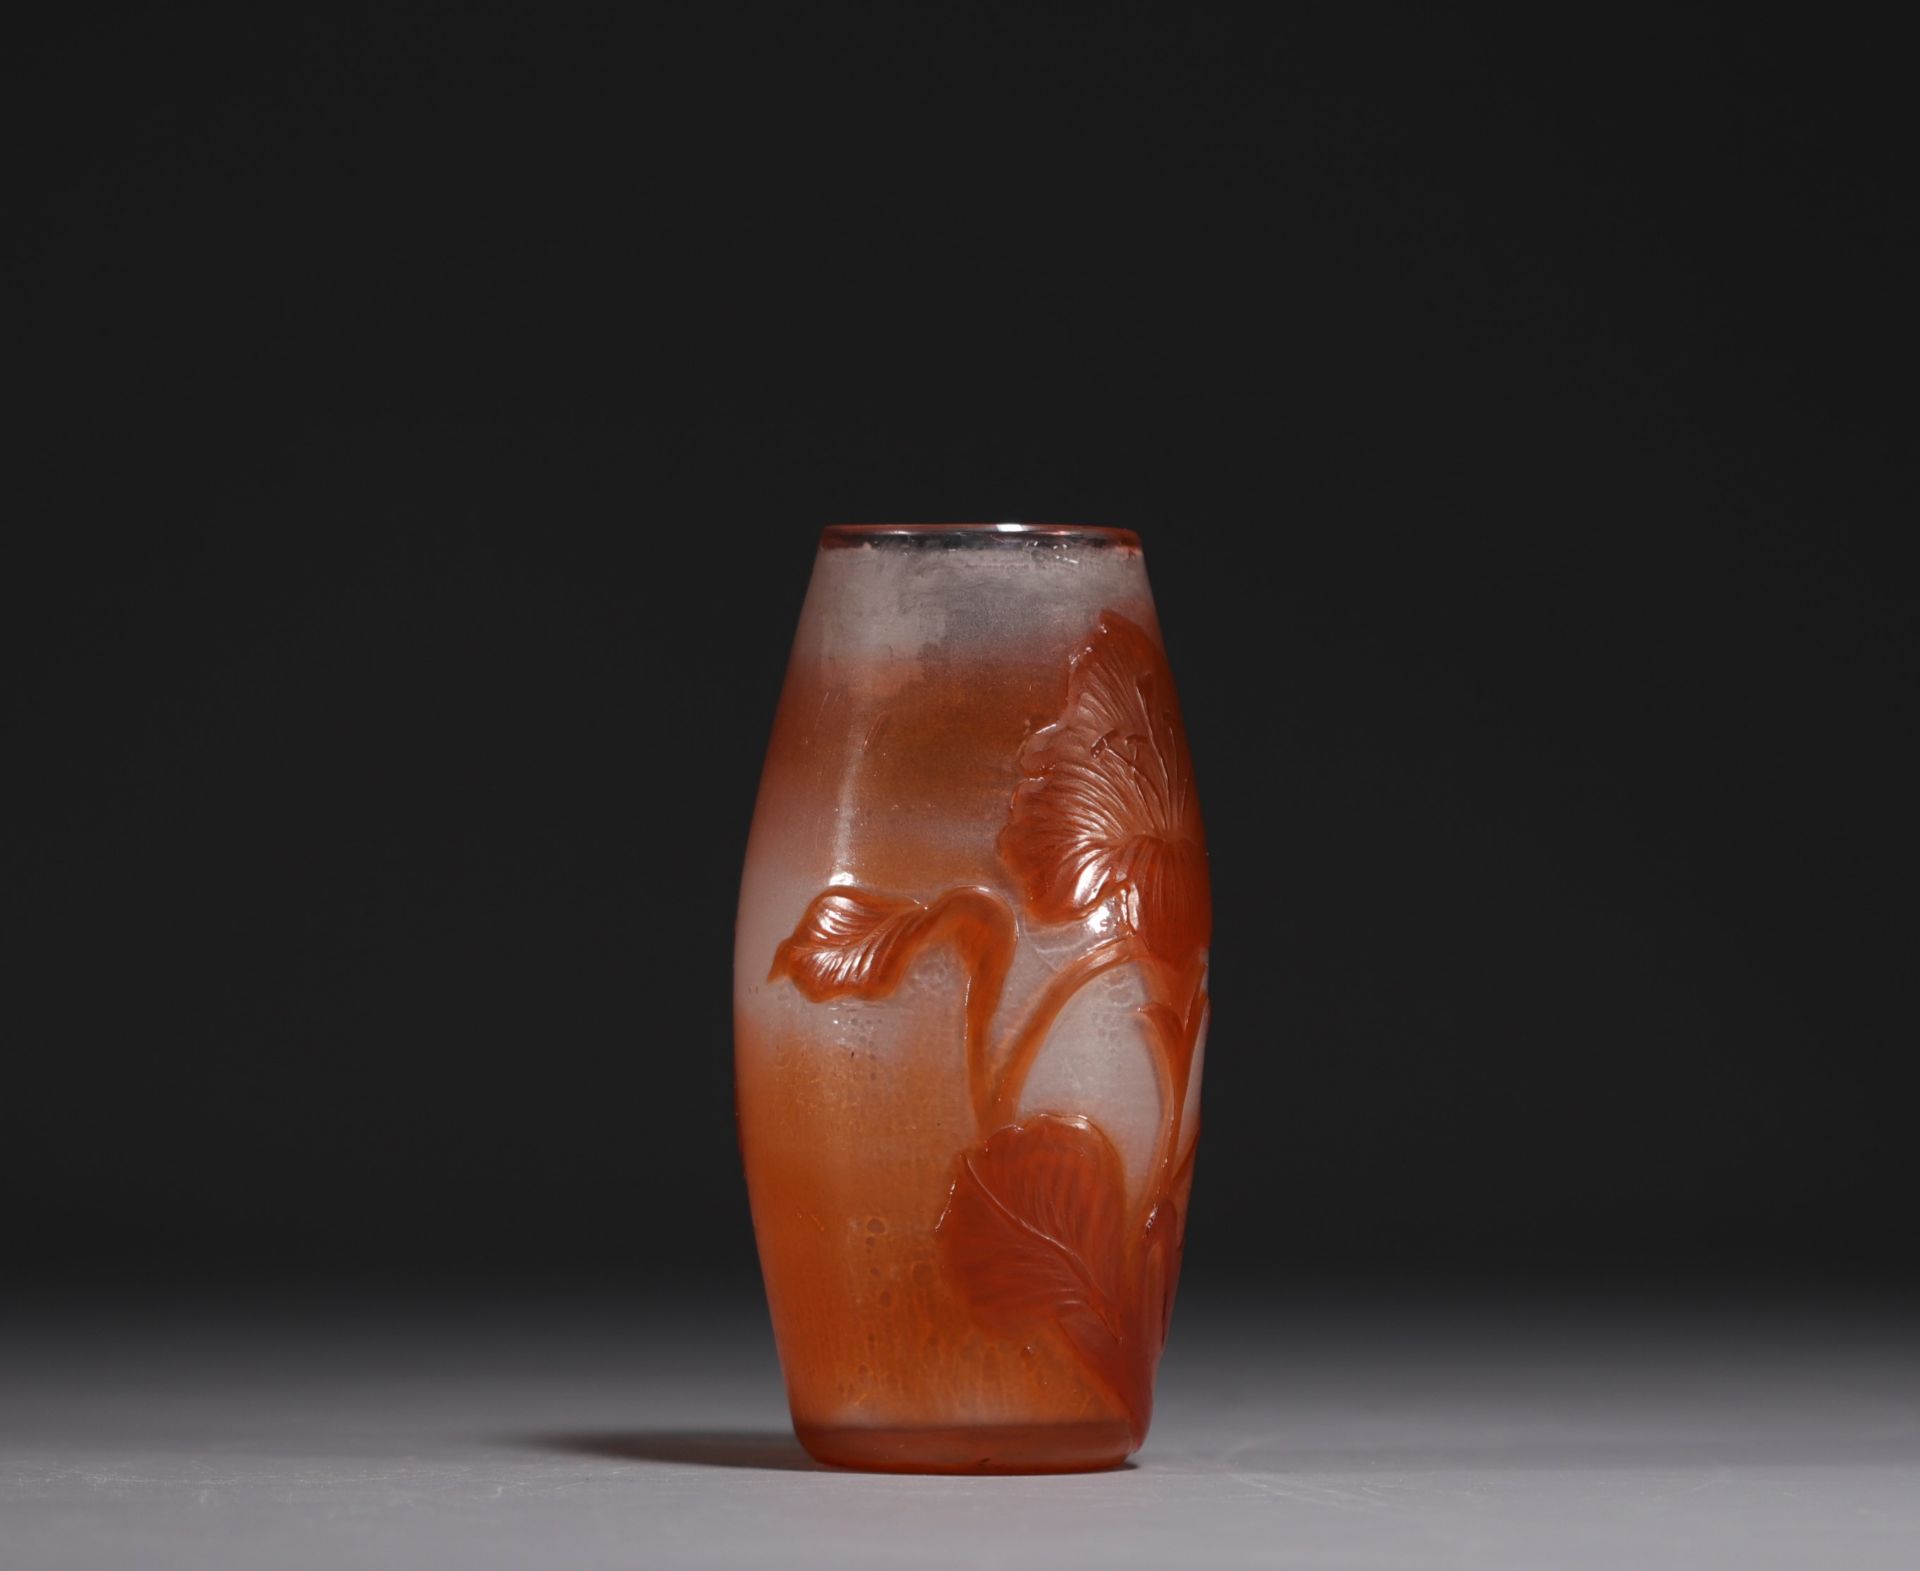 MULLER & CROISMARE - Acid-etched multi-layered glass vase with bindweed design, signed. - Image 2 of 5